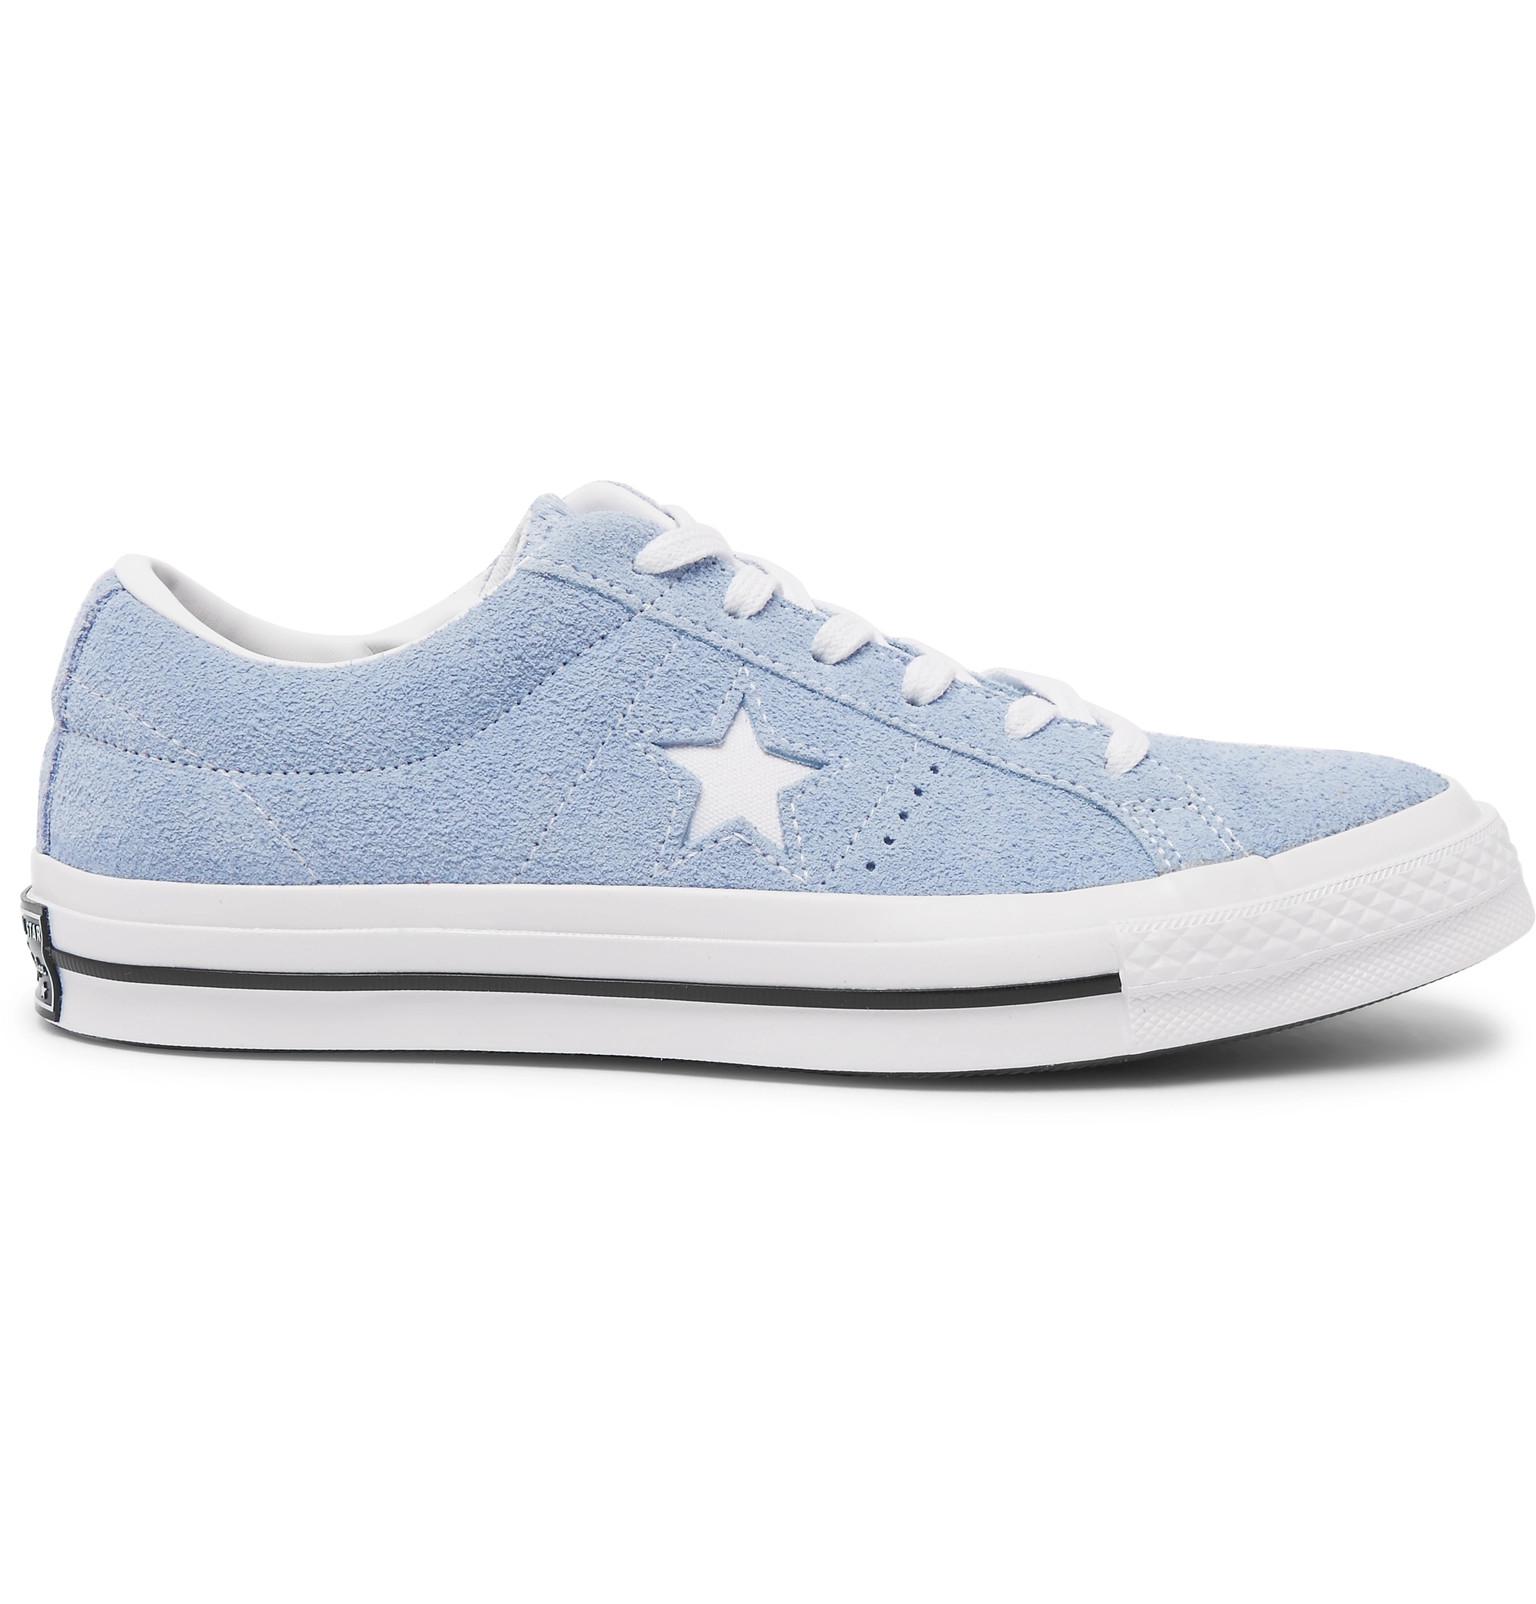 Converse One Star Ox Suede Sneakers in Light Blue (Blue) Men - Lyst